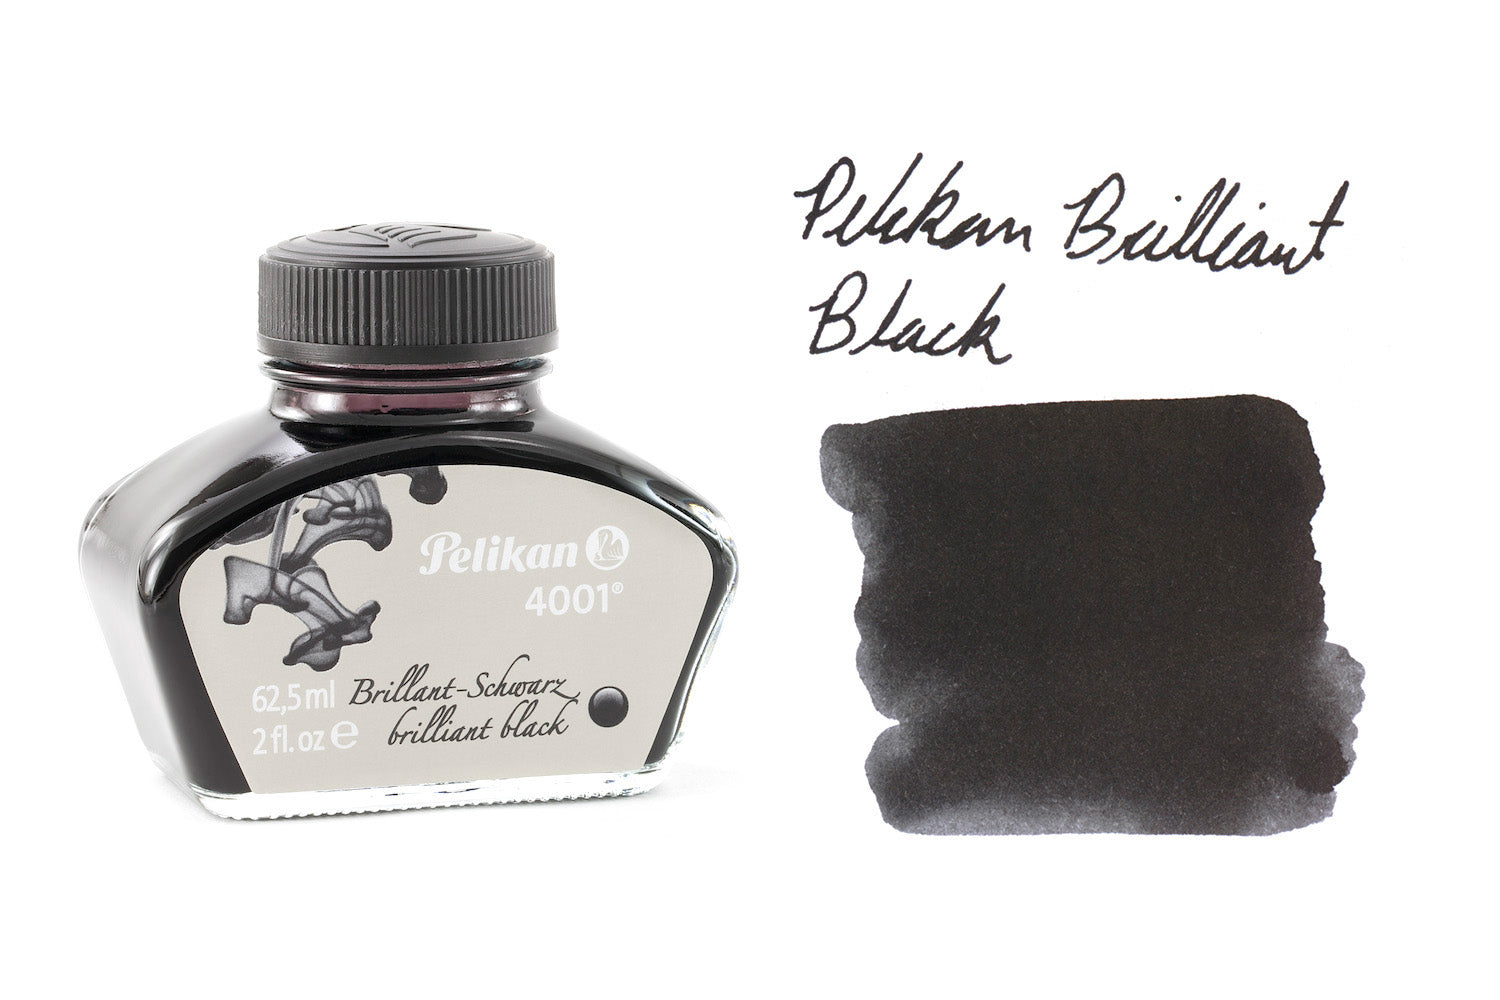 Pelikan 30 ml Bottle 4001 Fountain Pen Ink, Brilliant Black